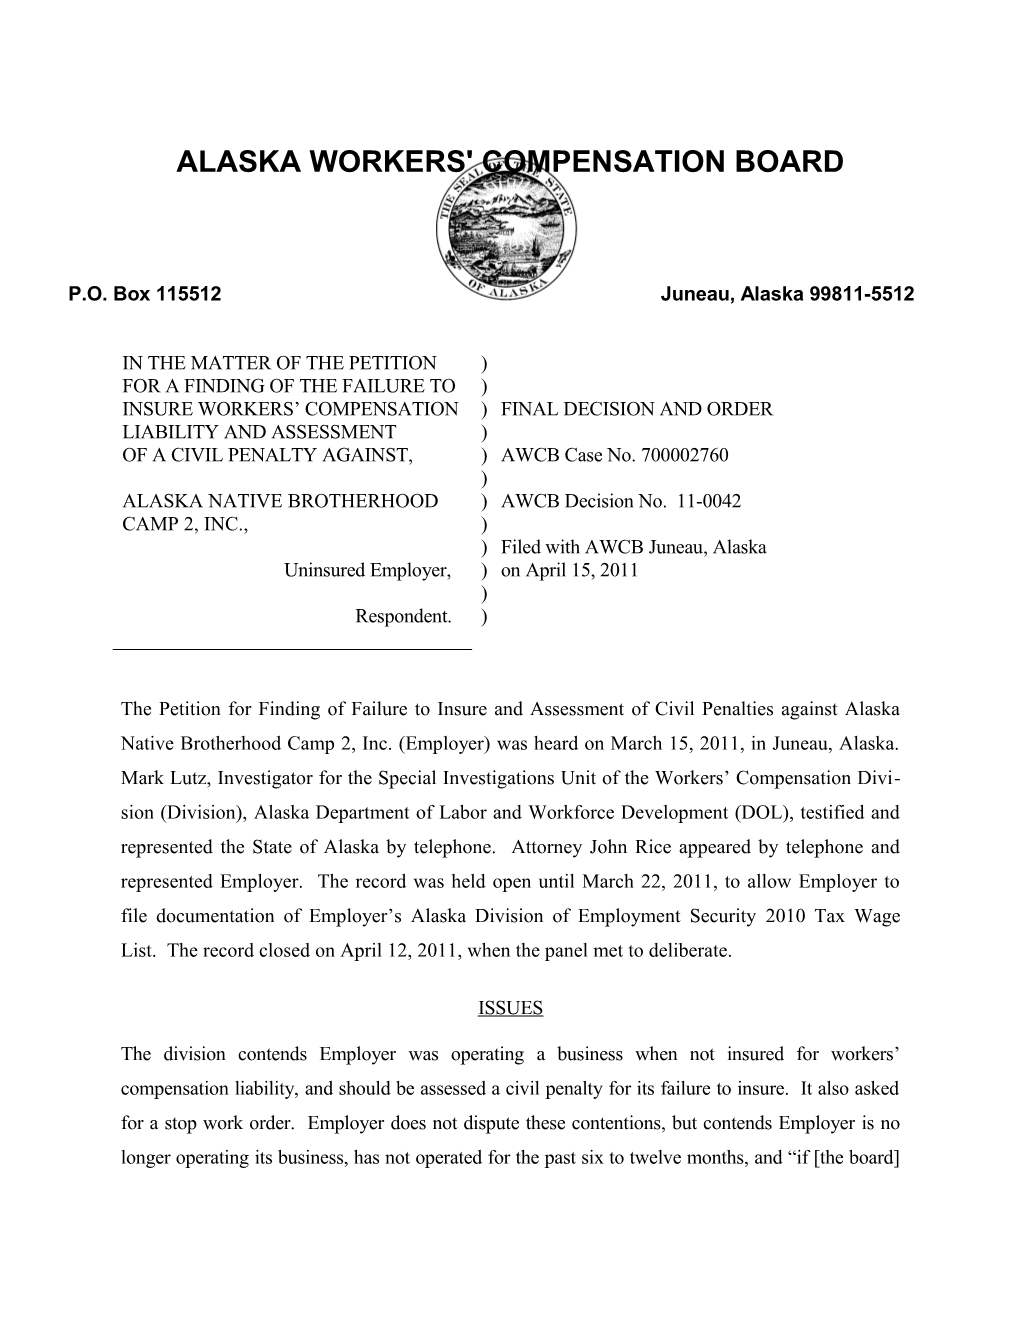 Alaska Workers' Compensation Board s3